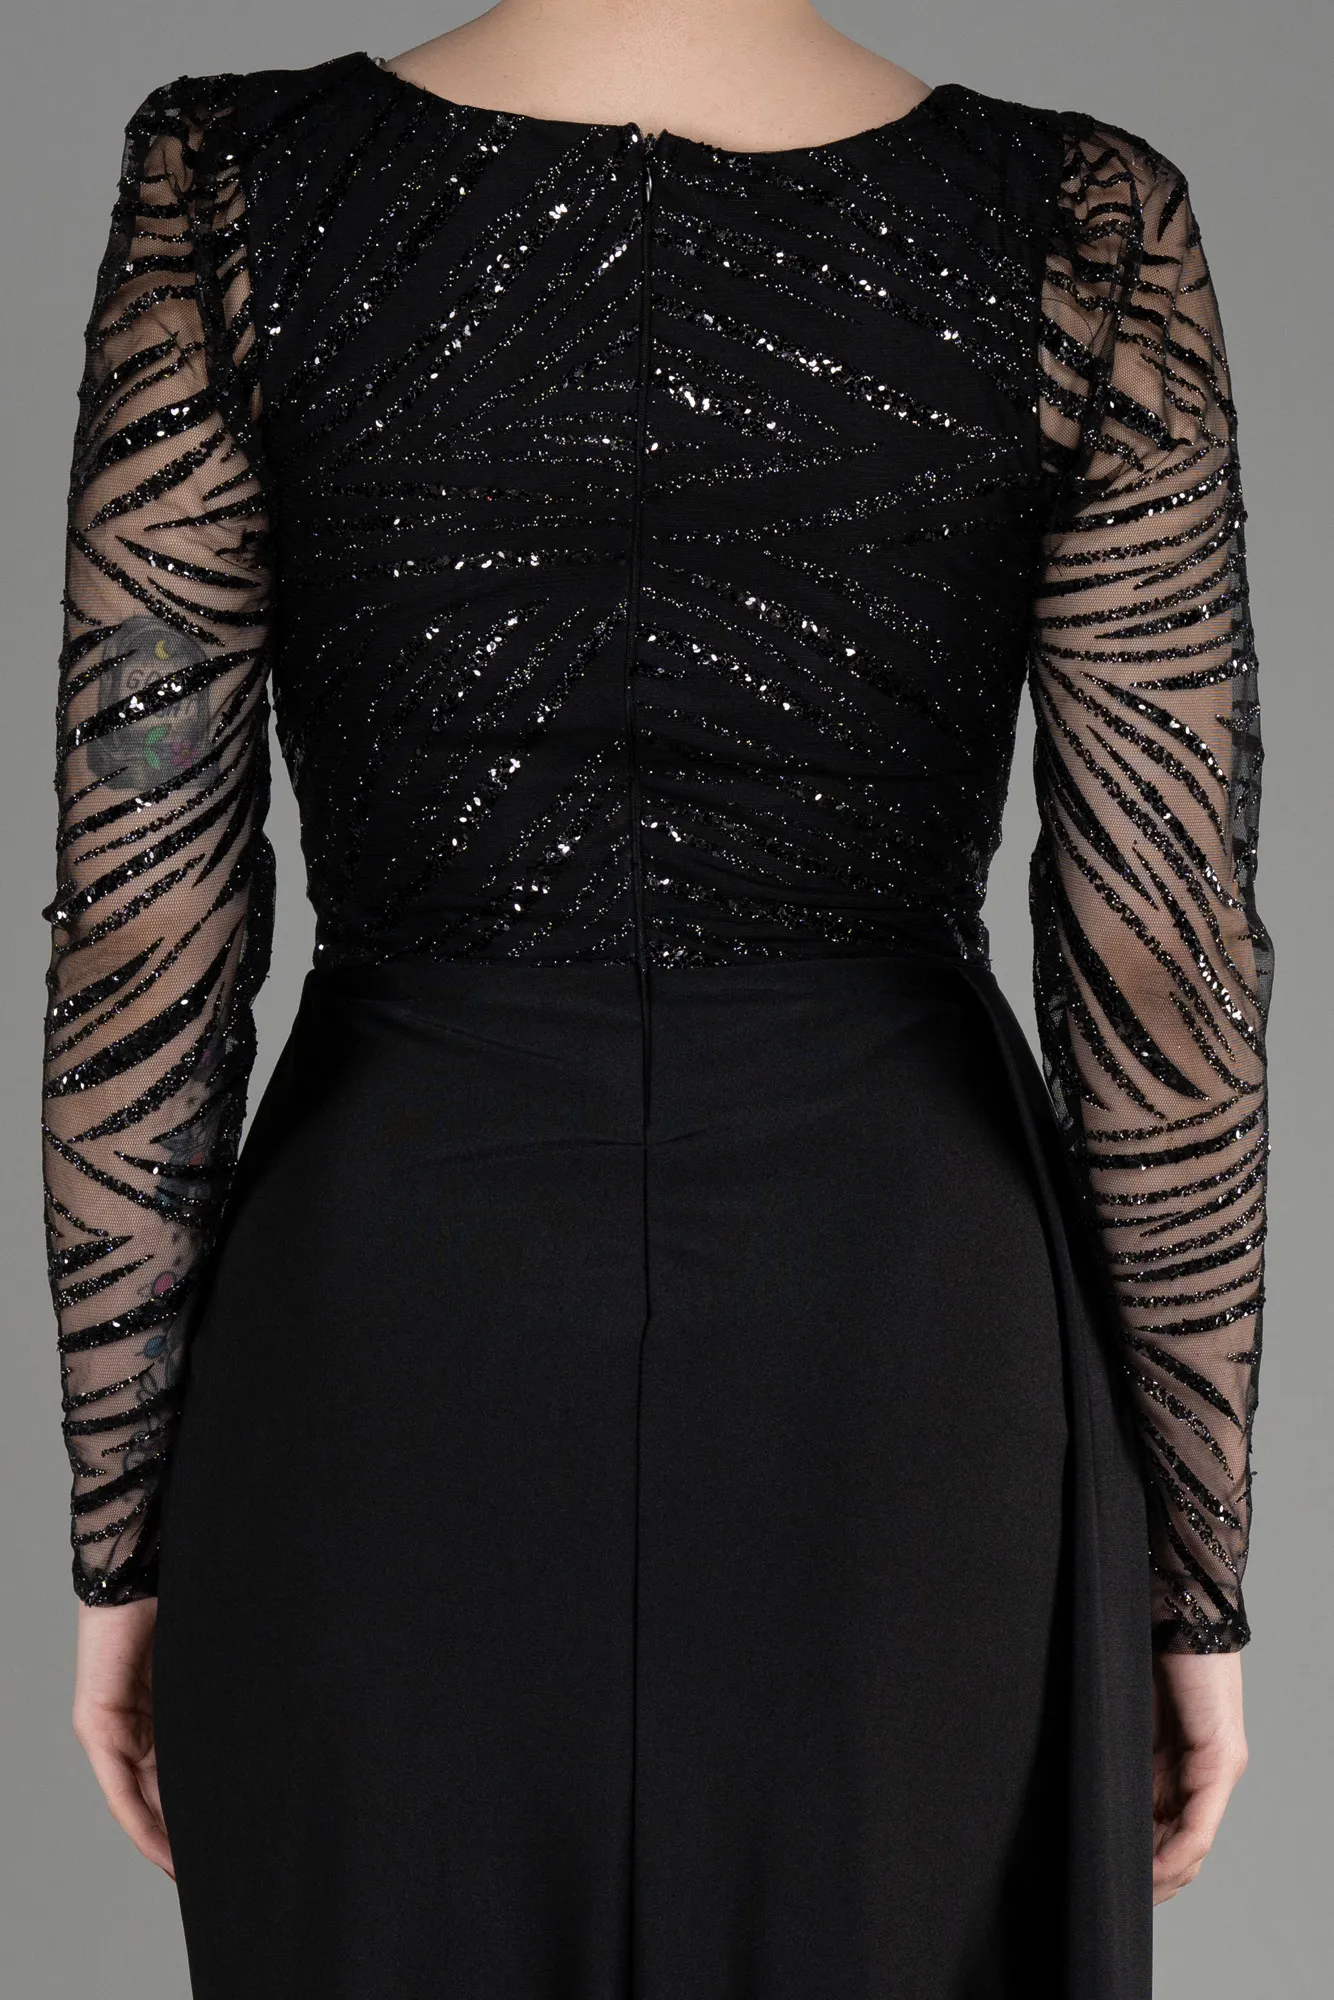 Black-Long Sleeve Evening Dress ABU3834